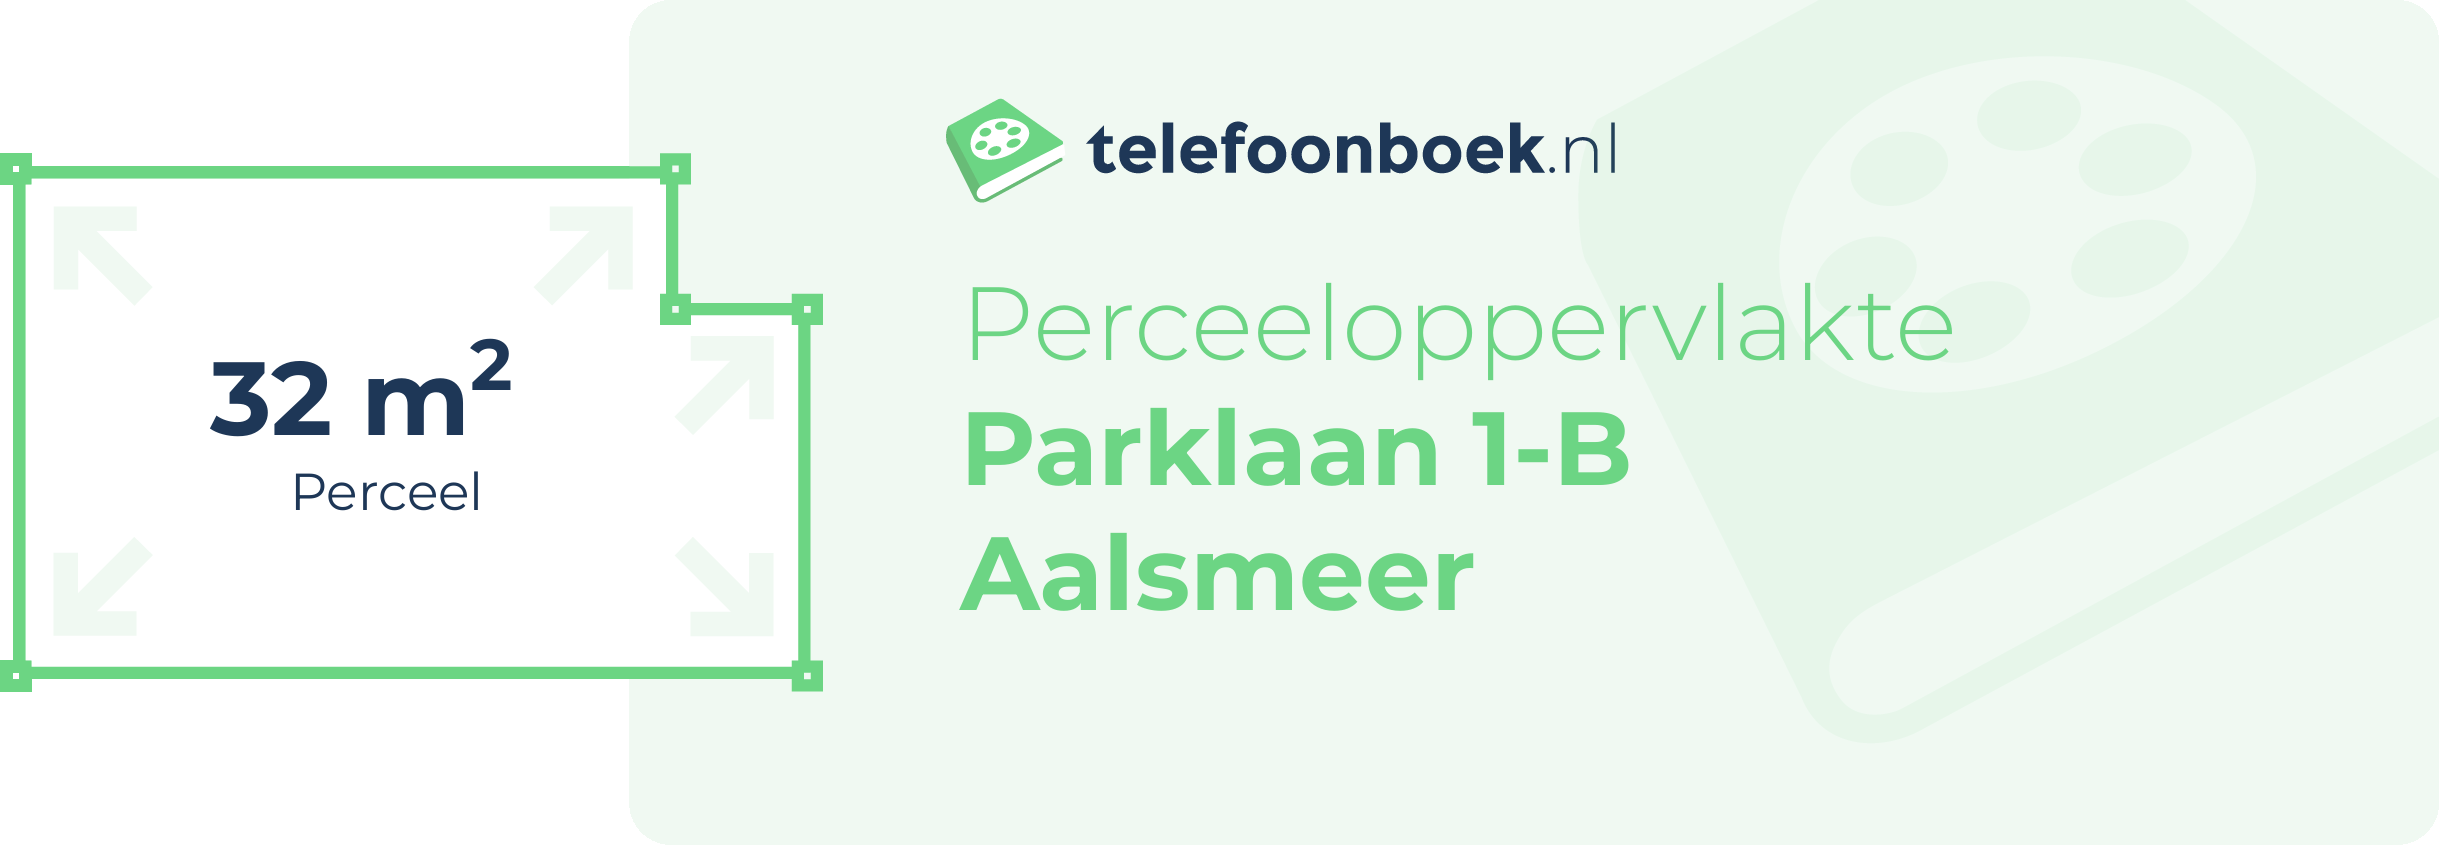 Perceeloppervlakte Parklaan 1-B Aalsmeer